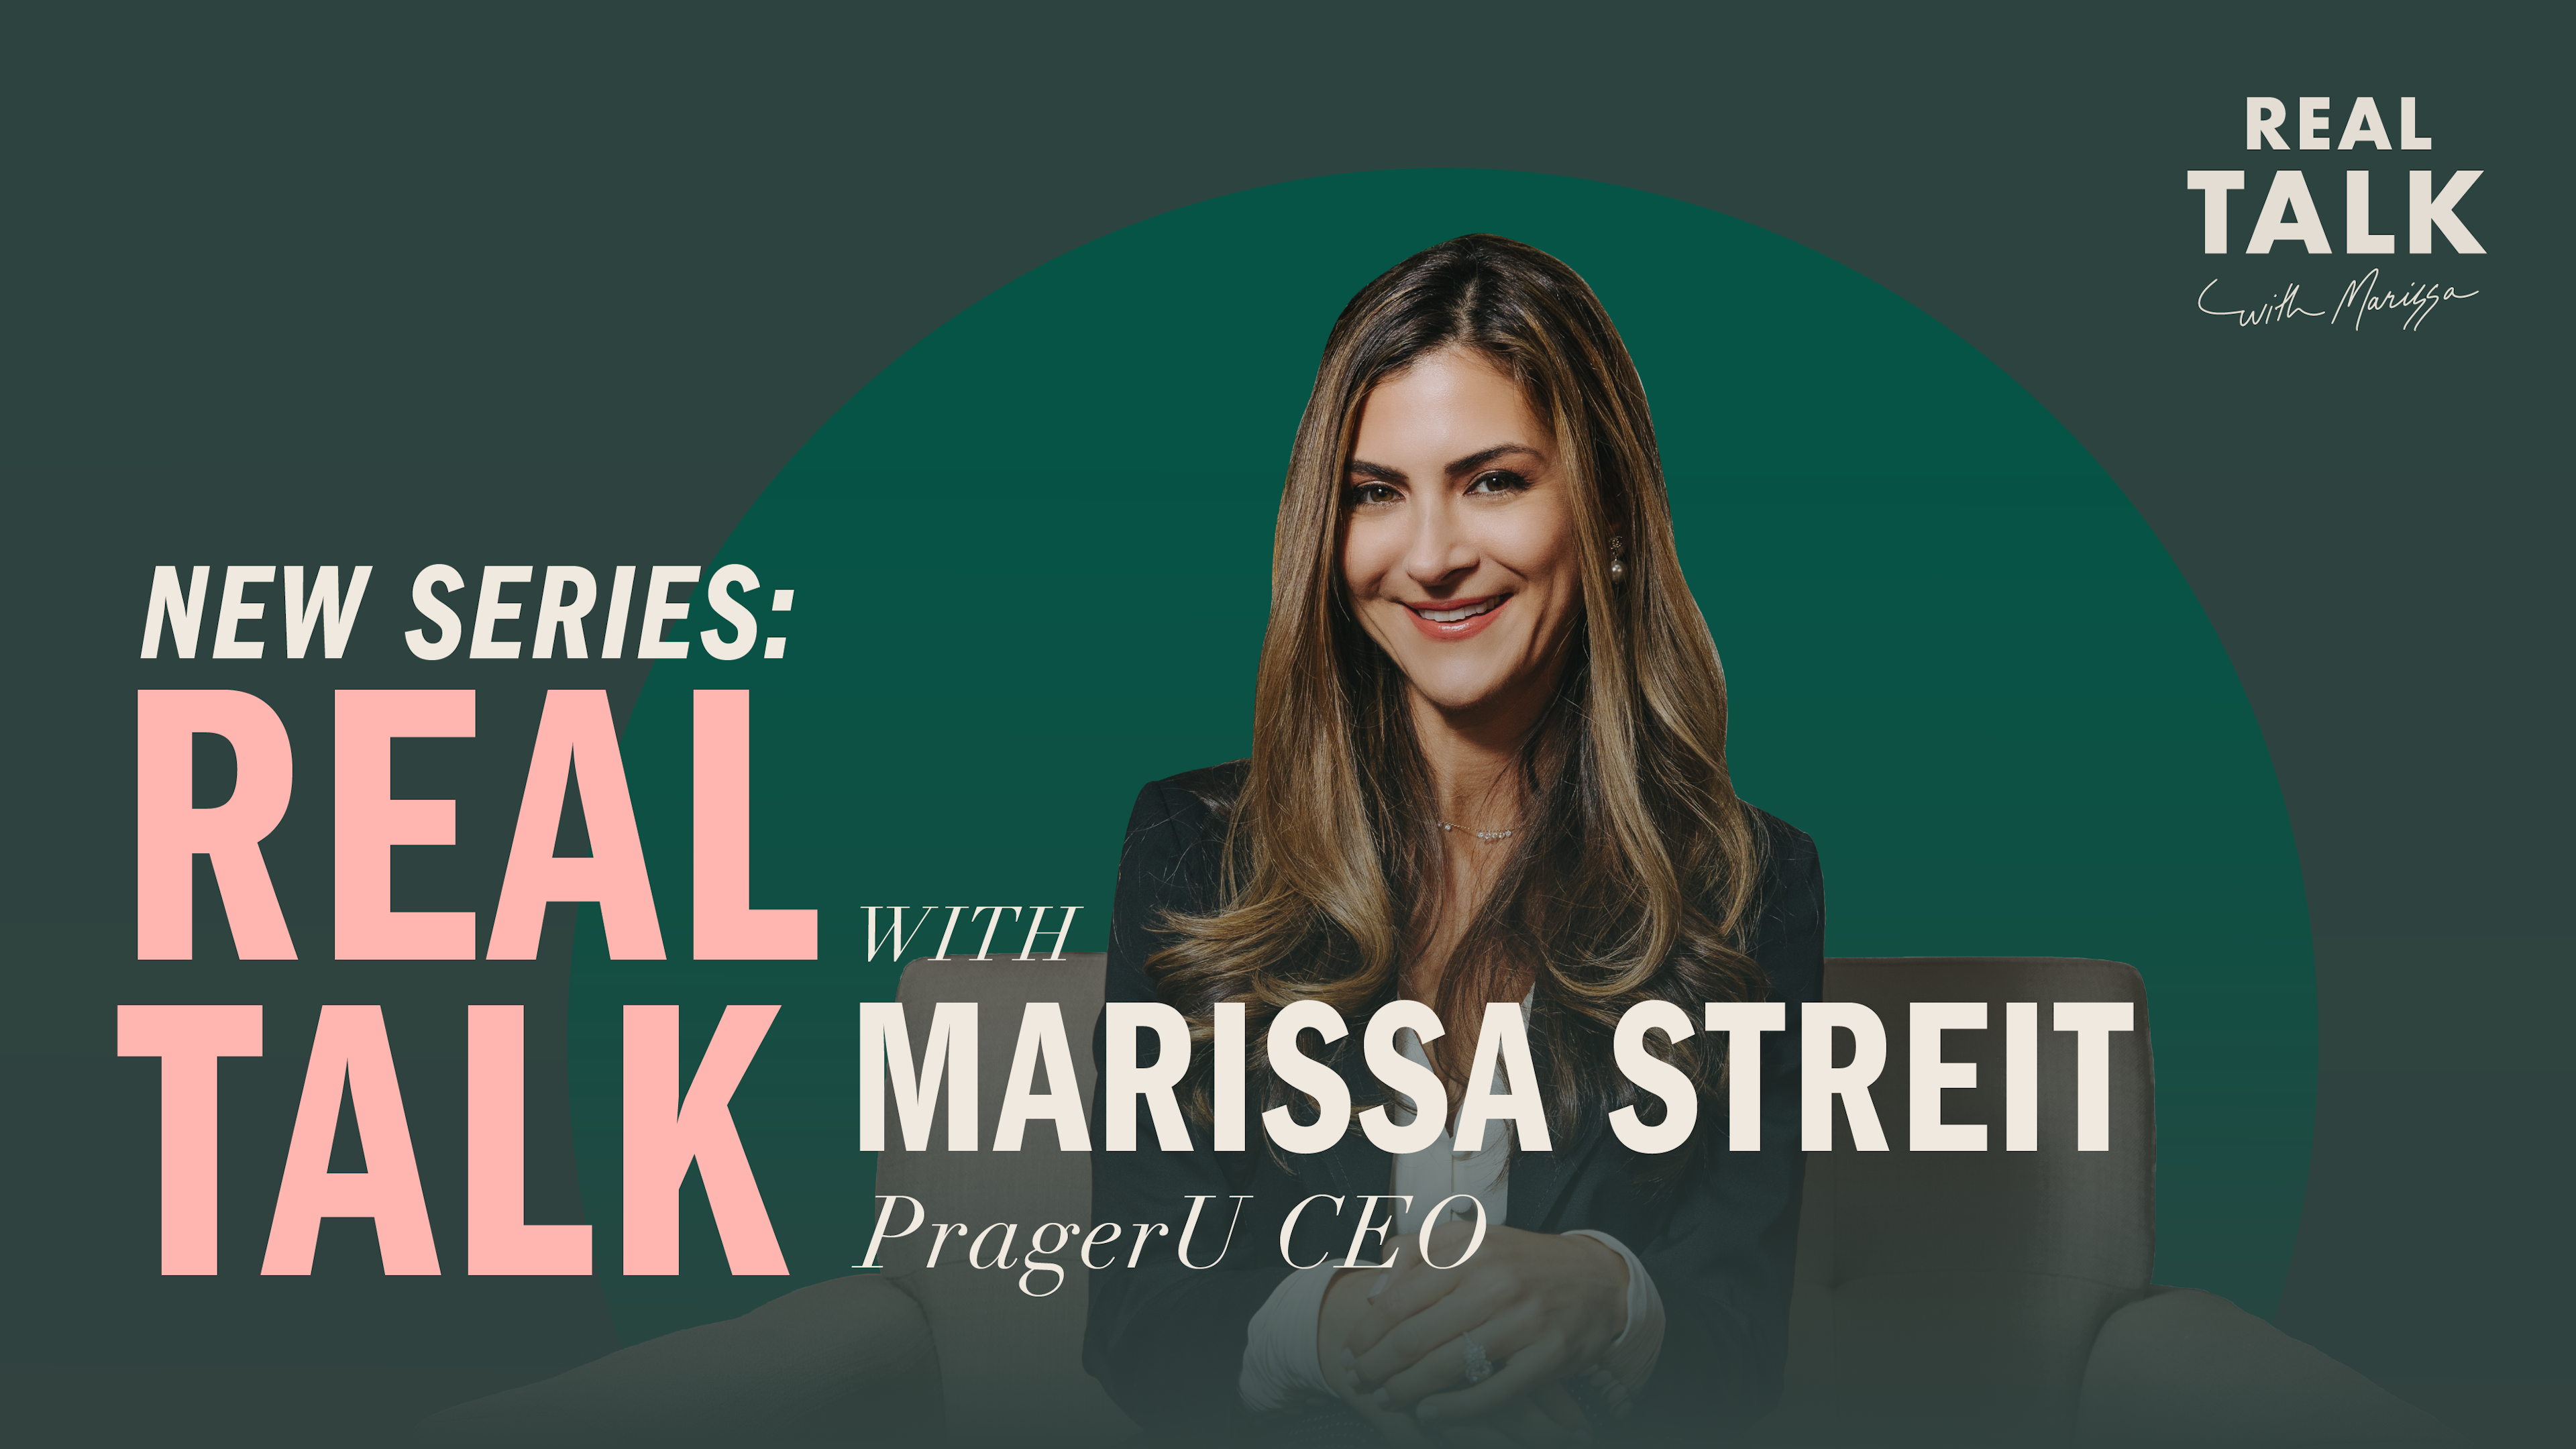 New Series: Real Talk with Marissa Streit